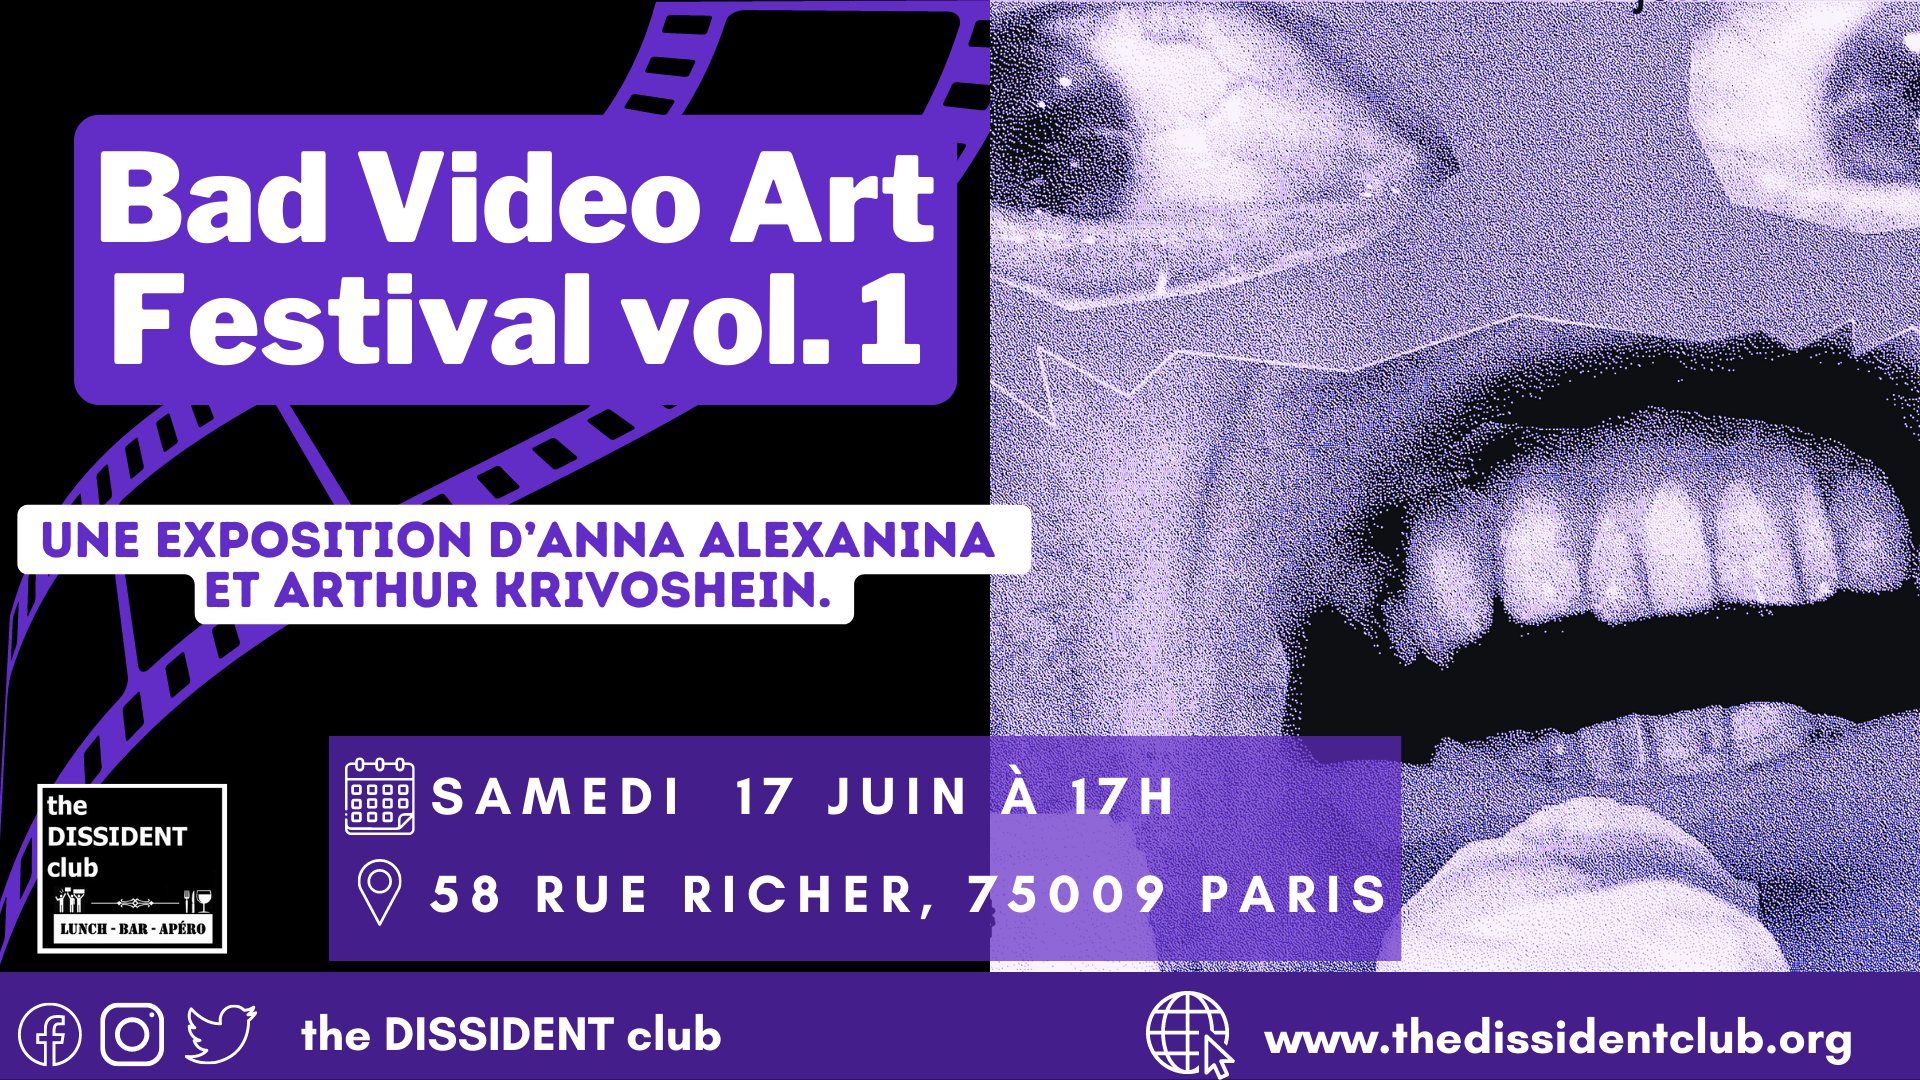 Bad Video Art Festival screenings at The Dissident Club, Paris